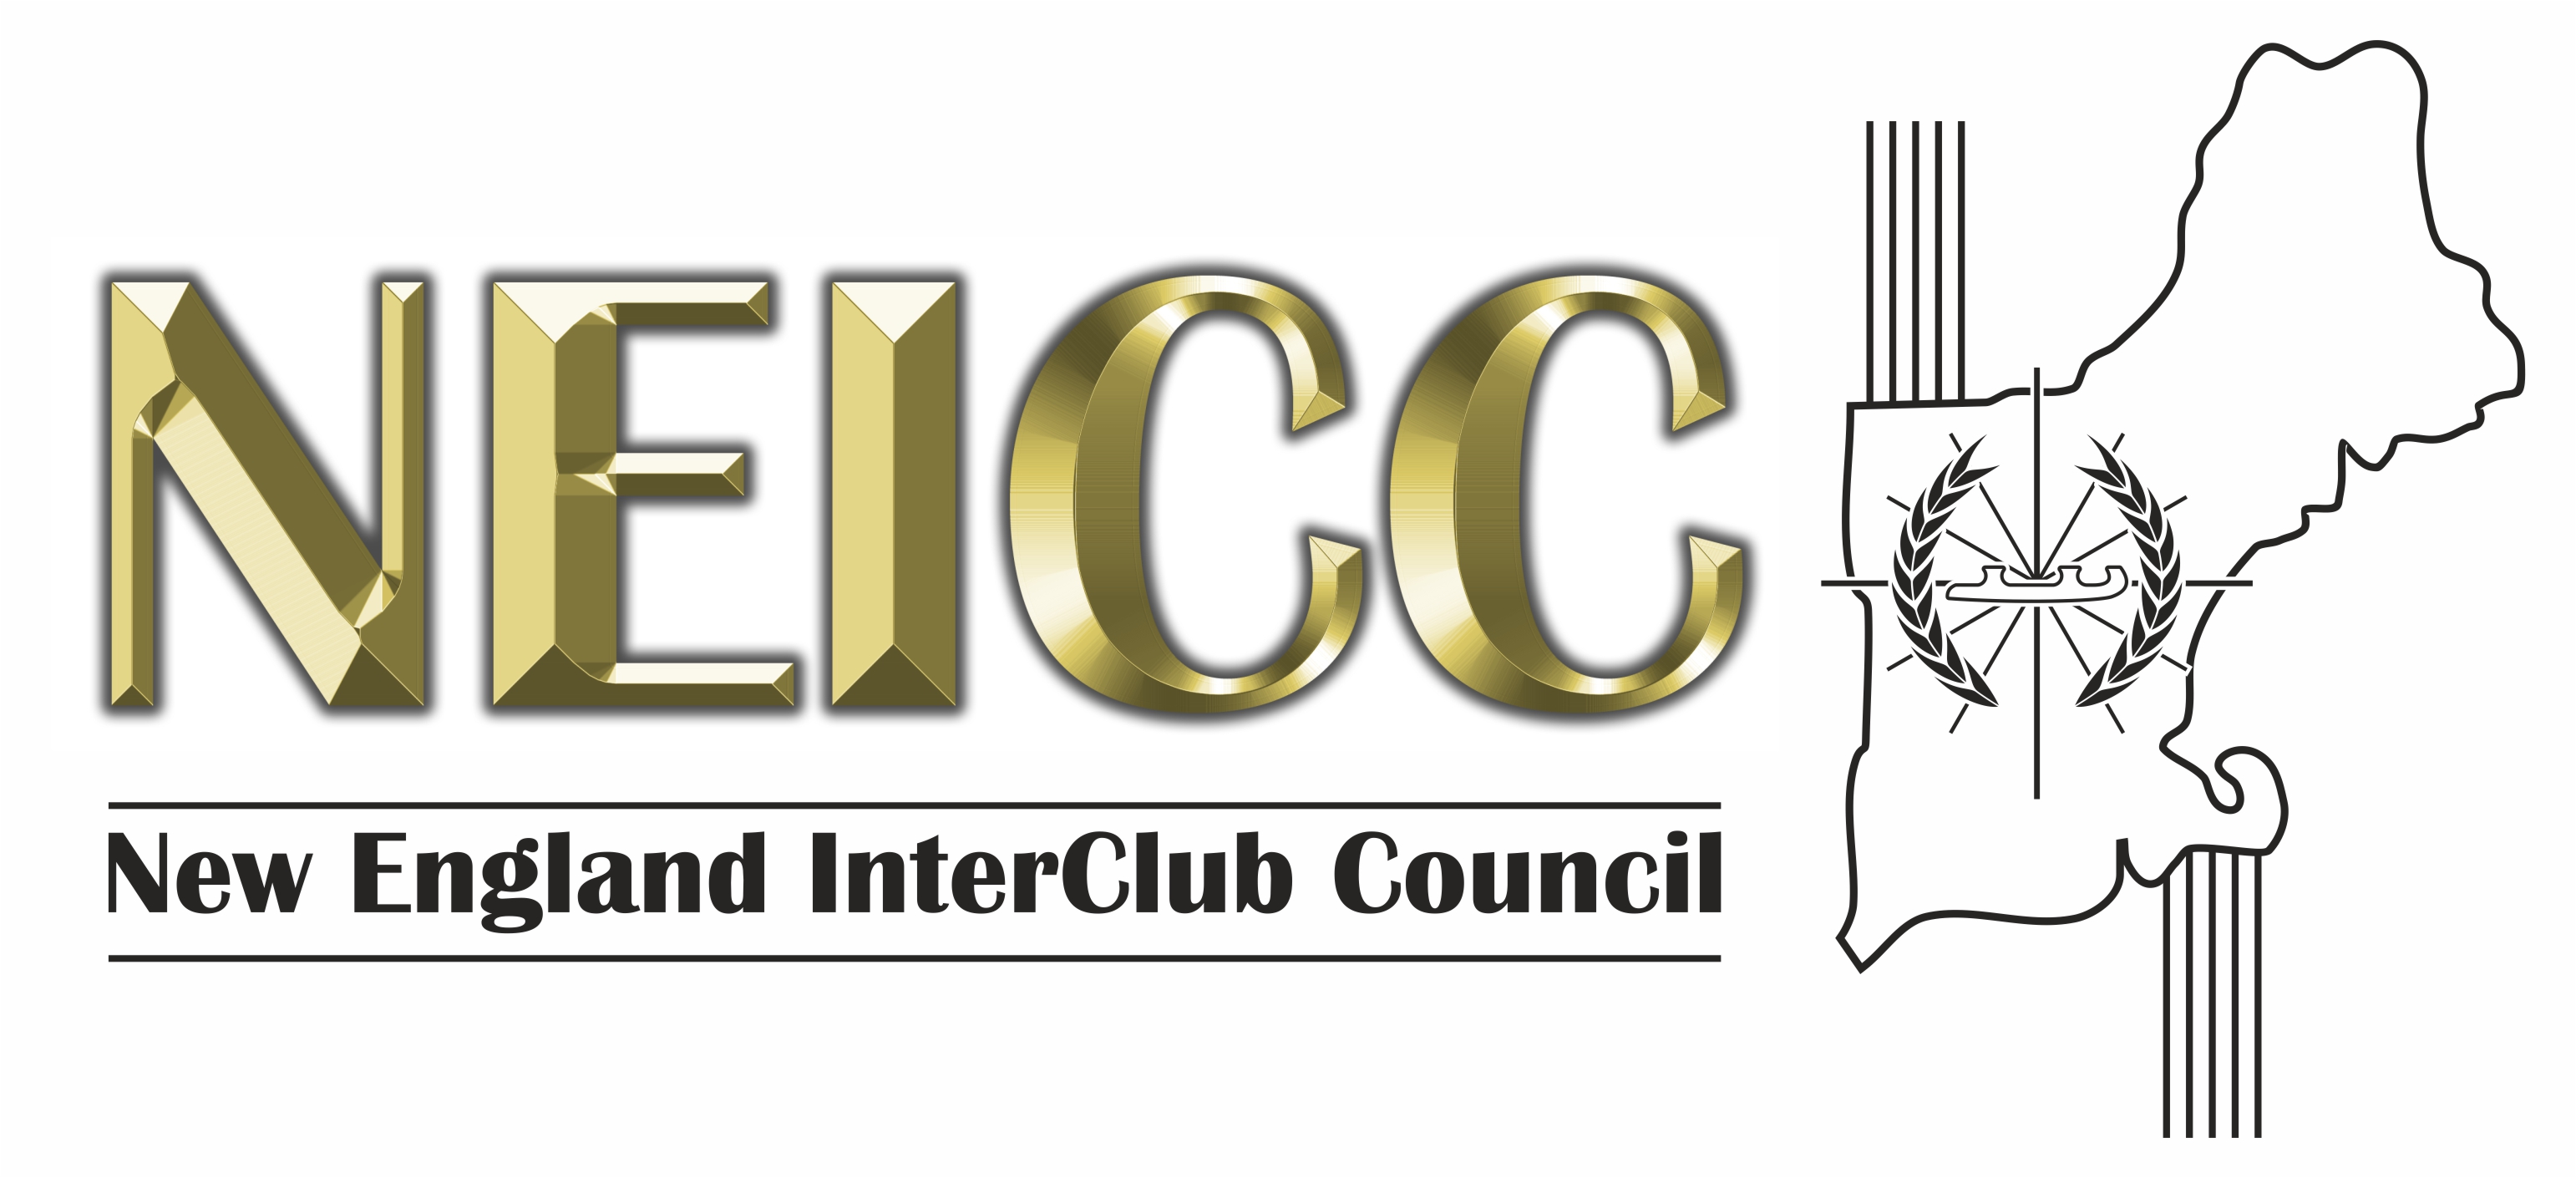 New England InterClub Council